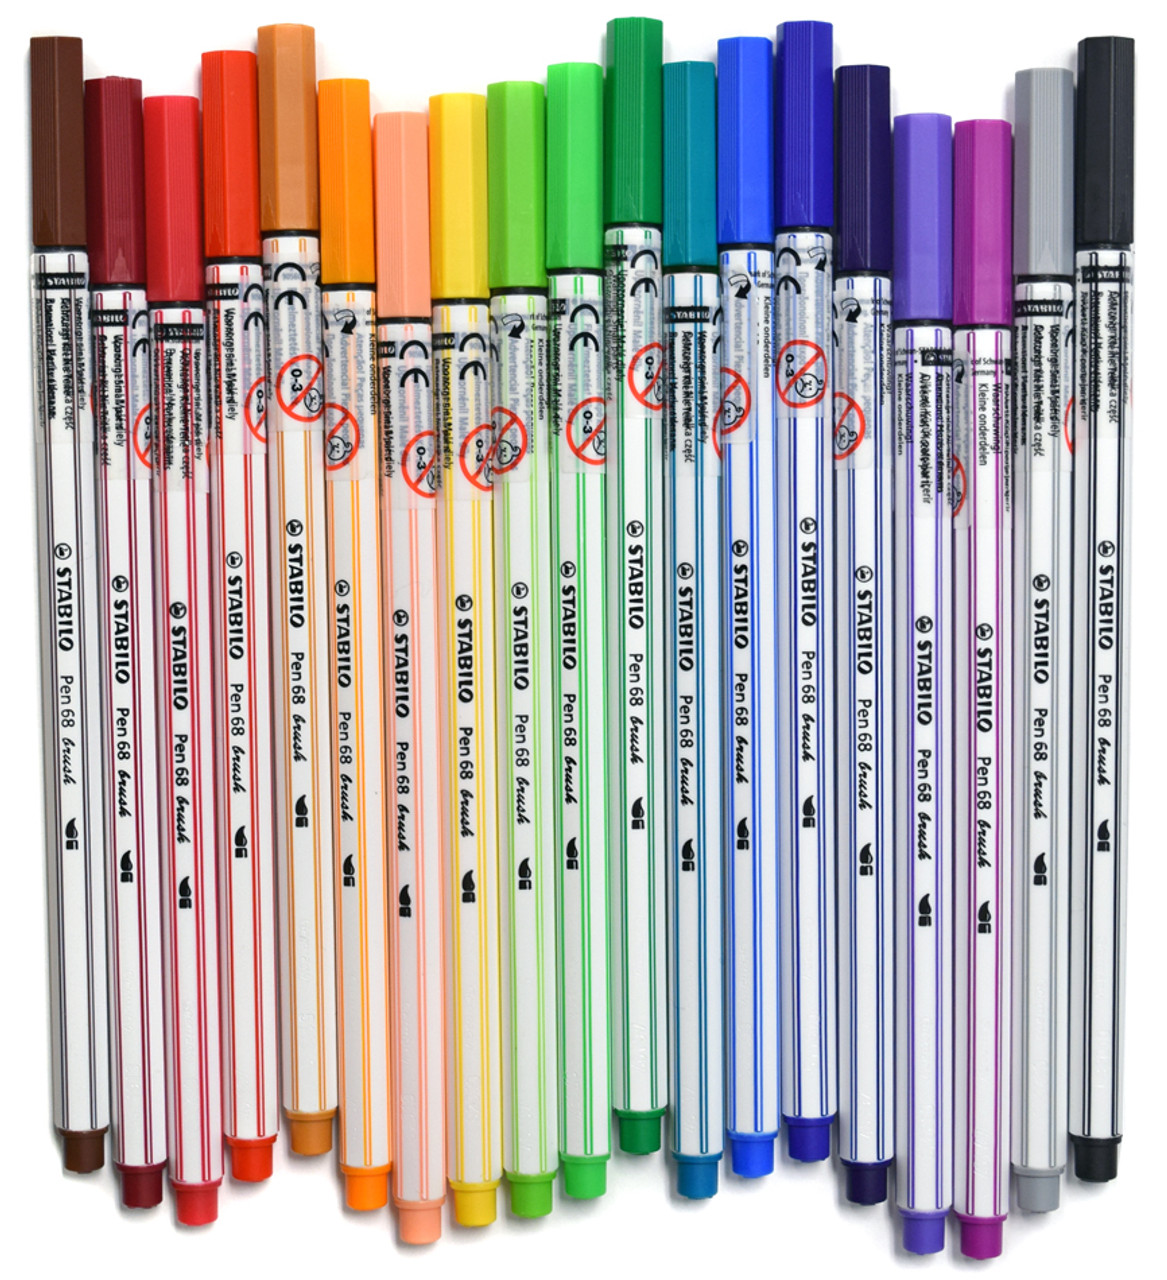 10 Packs: 6 ct. (60 total) STABILO® Pen 68 Brush Markers